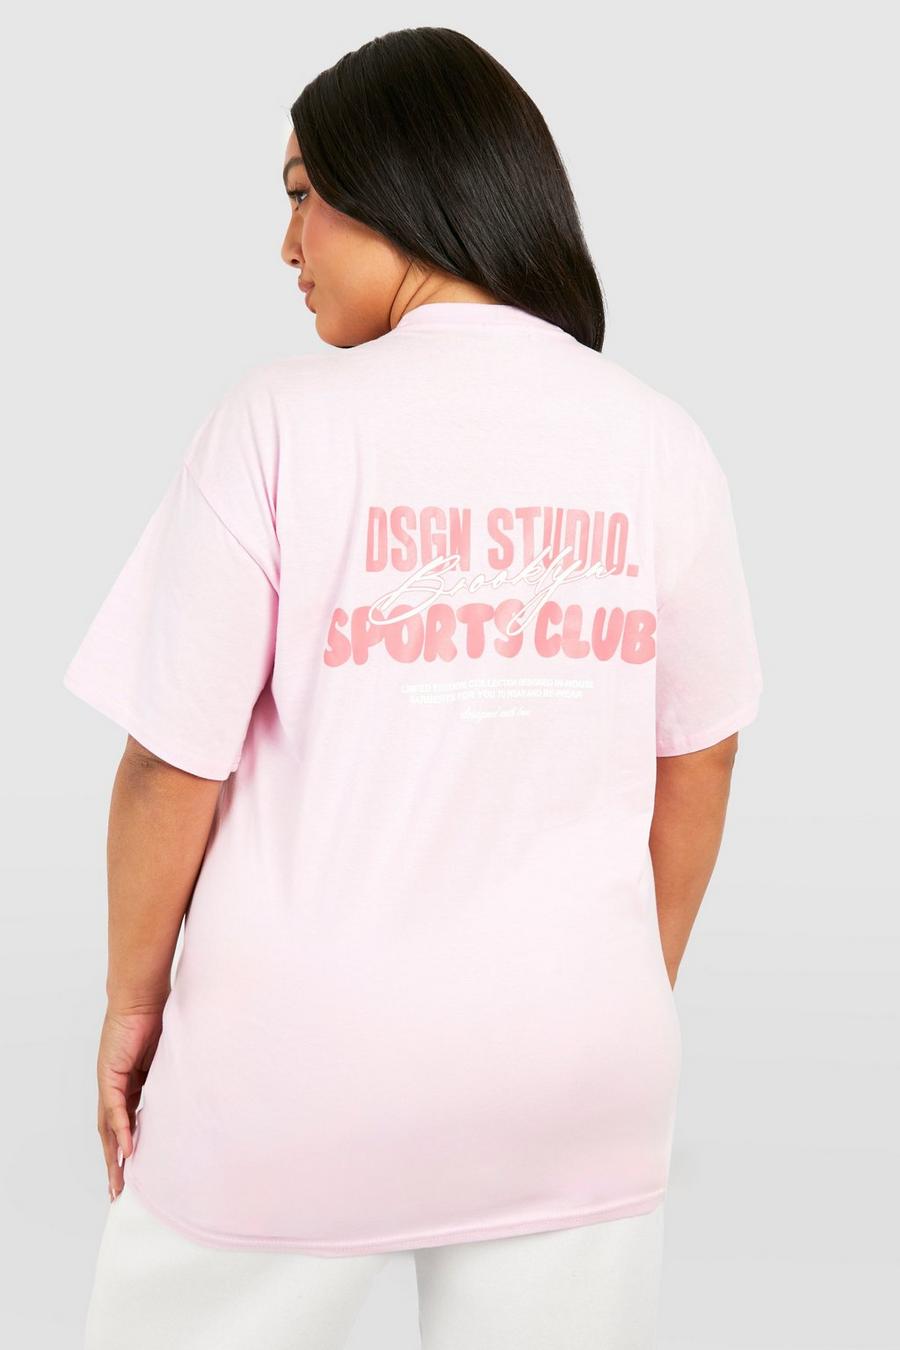 Plus T-Shirt mit Dsgn Studio Brooklyn Schriftzug, Baby pink image number 1